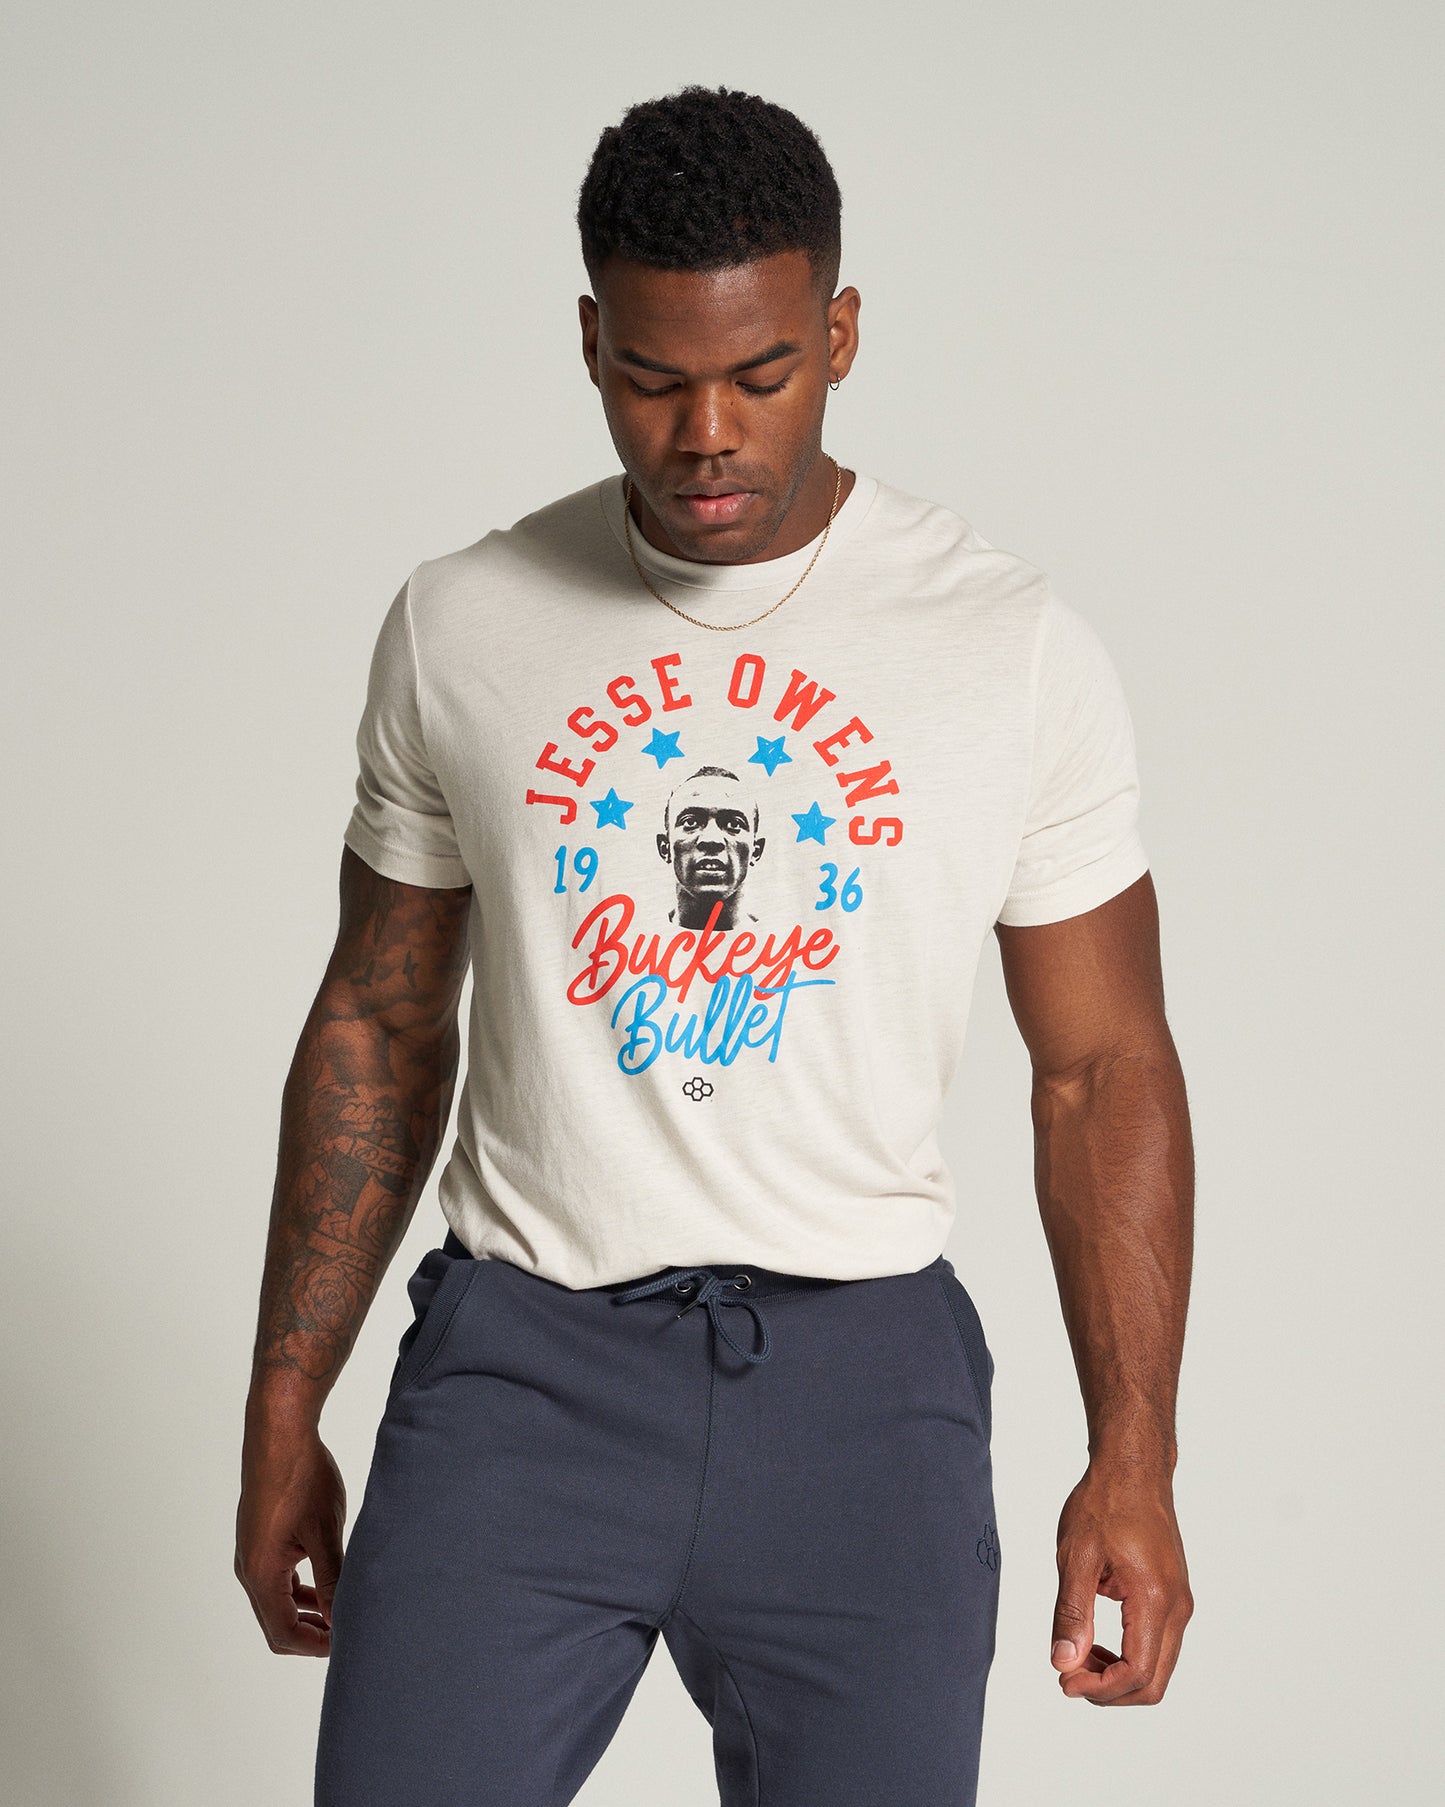 Jesse Owens Vintage T-Shirt | RUDIS